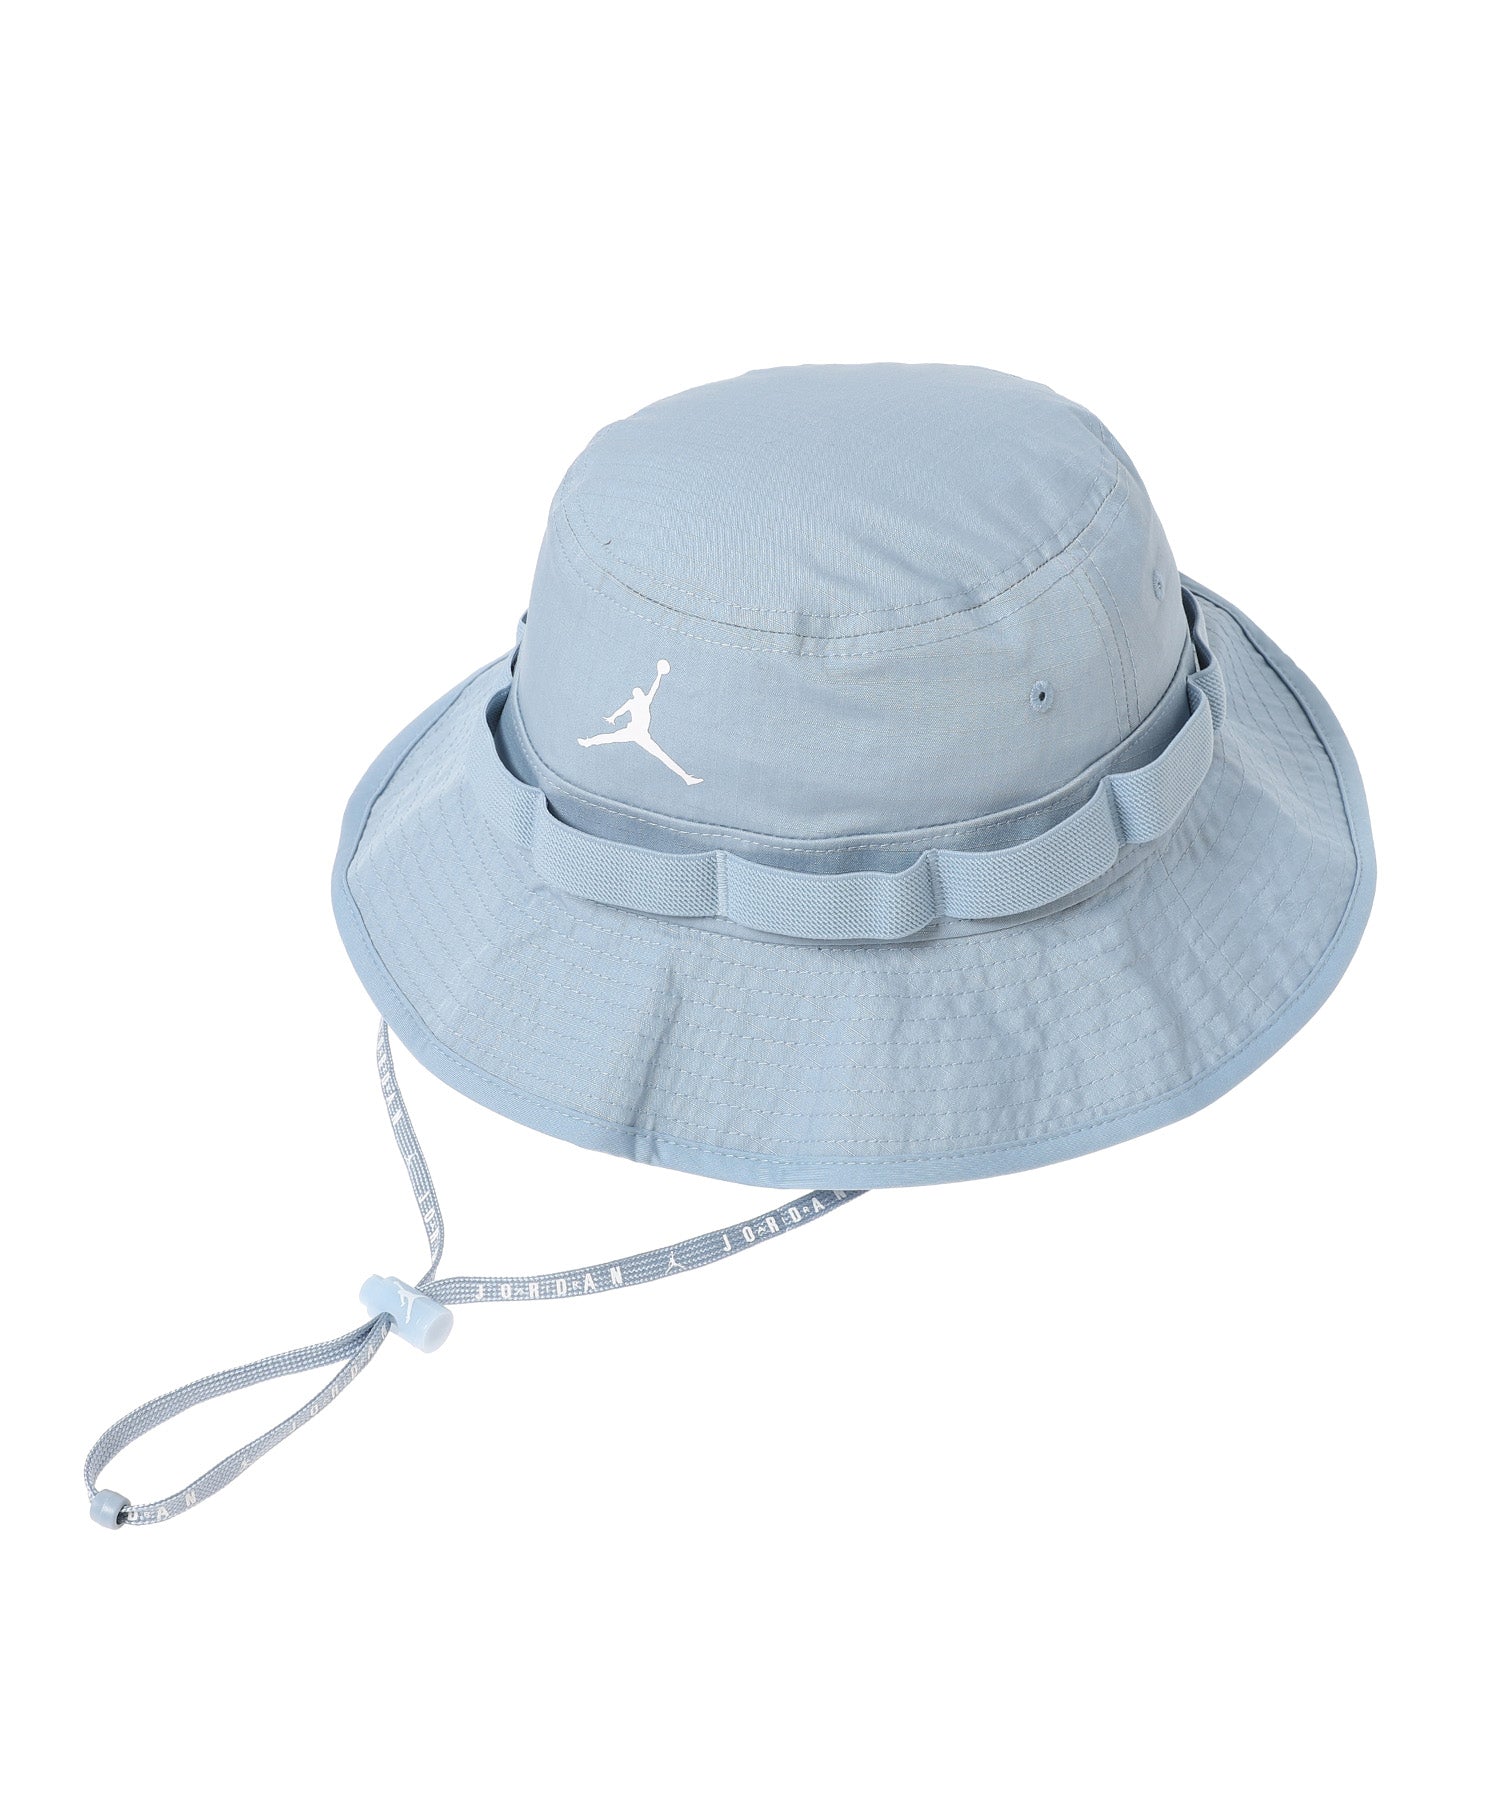 Jordan Apex Jumpman Bucket Hat - NIKE (ナイキ) - cap (キャップ 